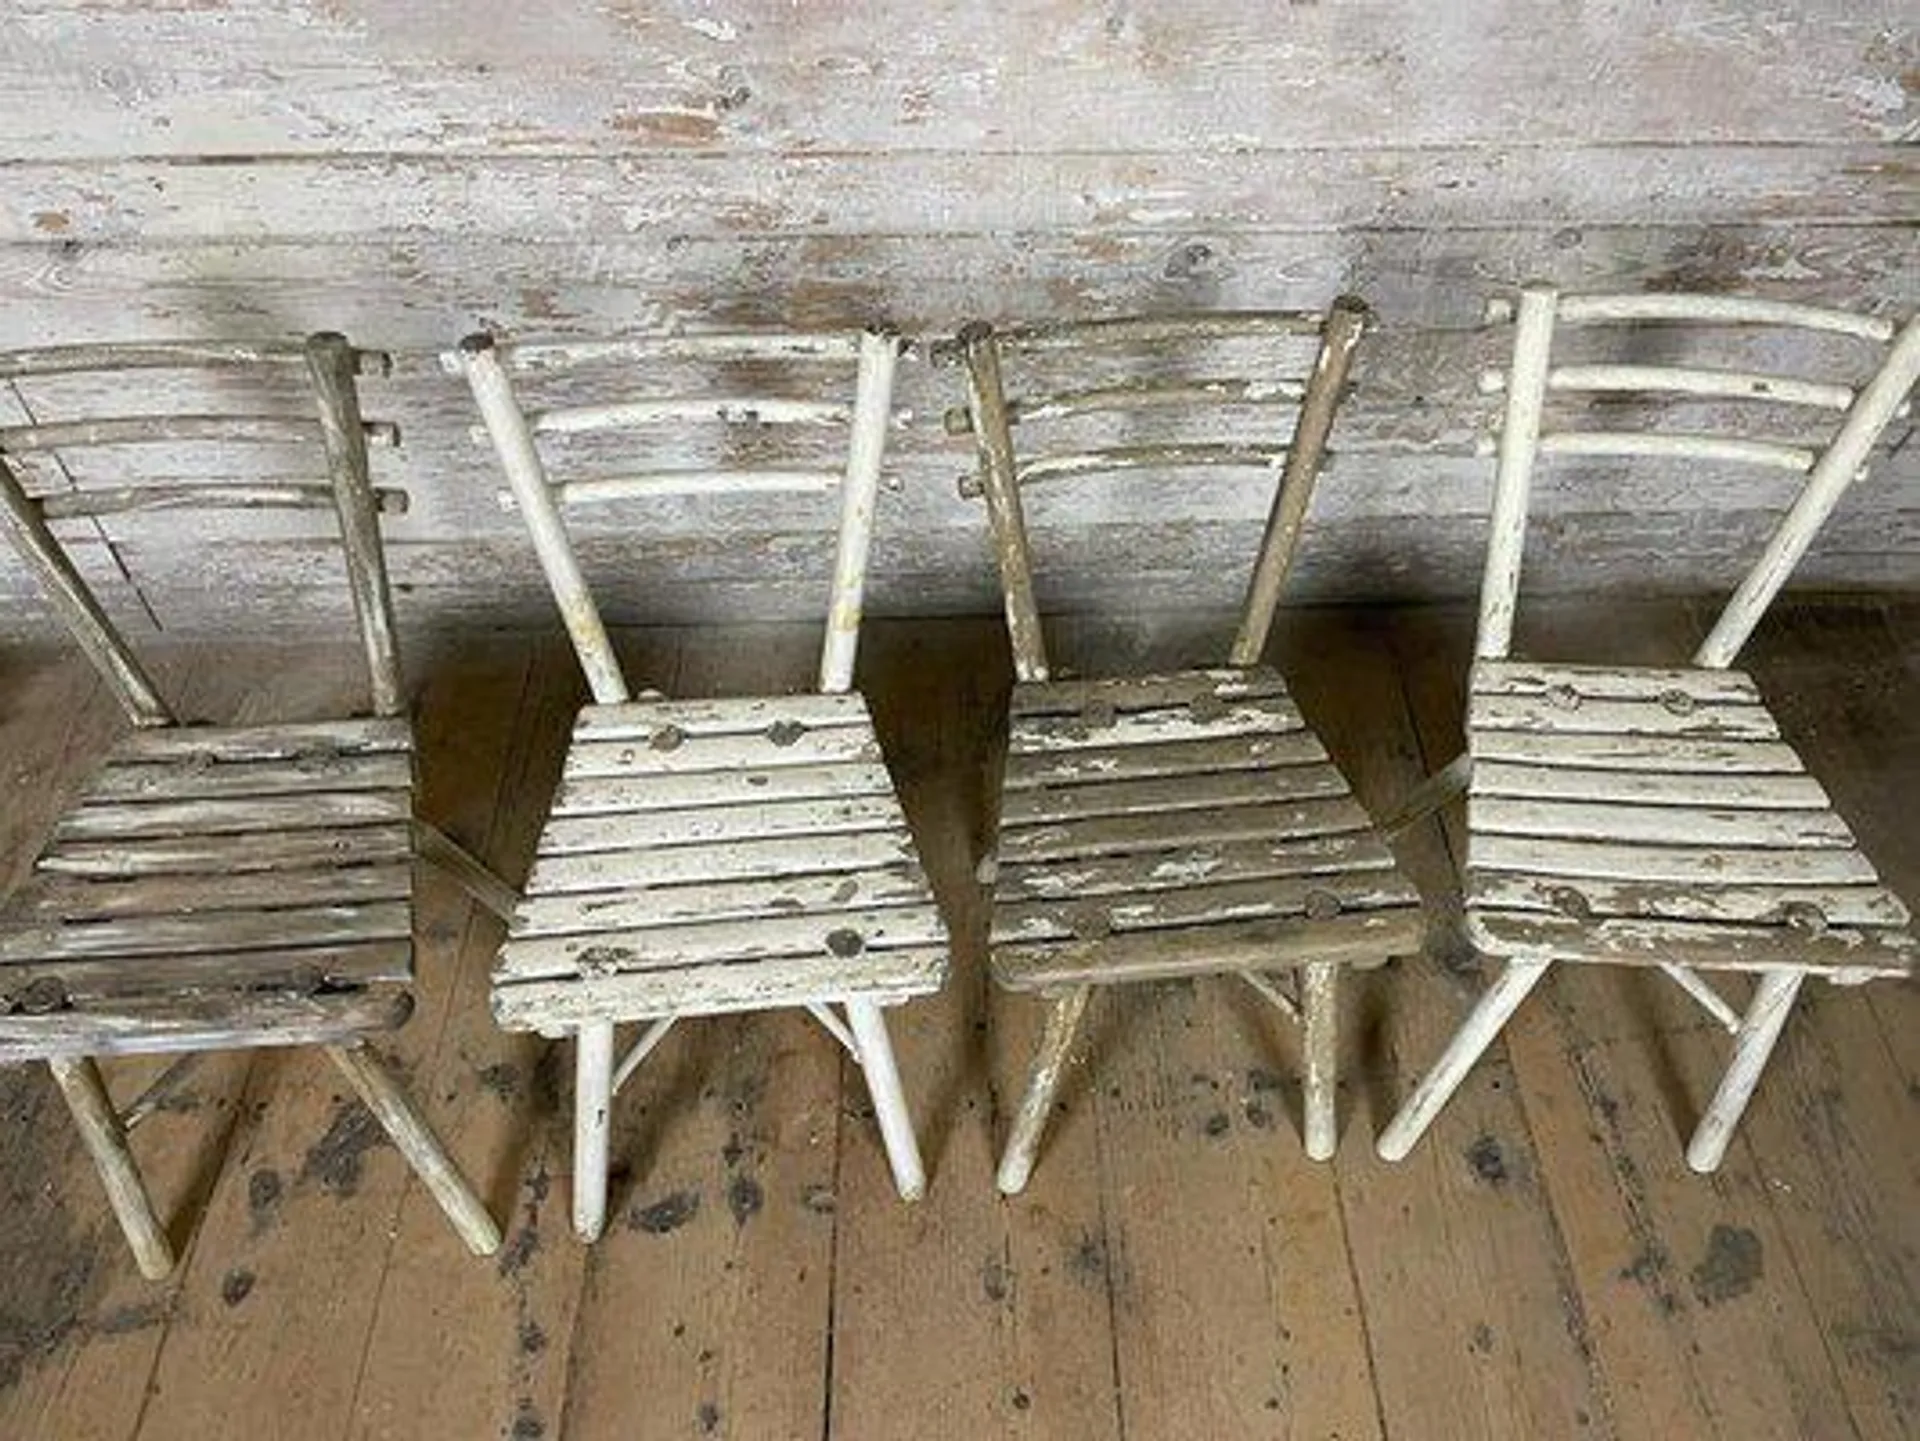 Garden Chairs, Set of 4